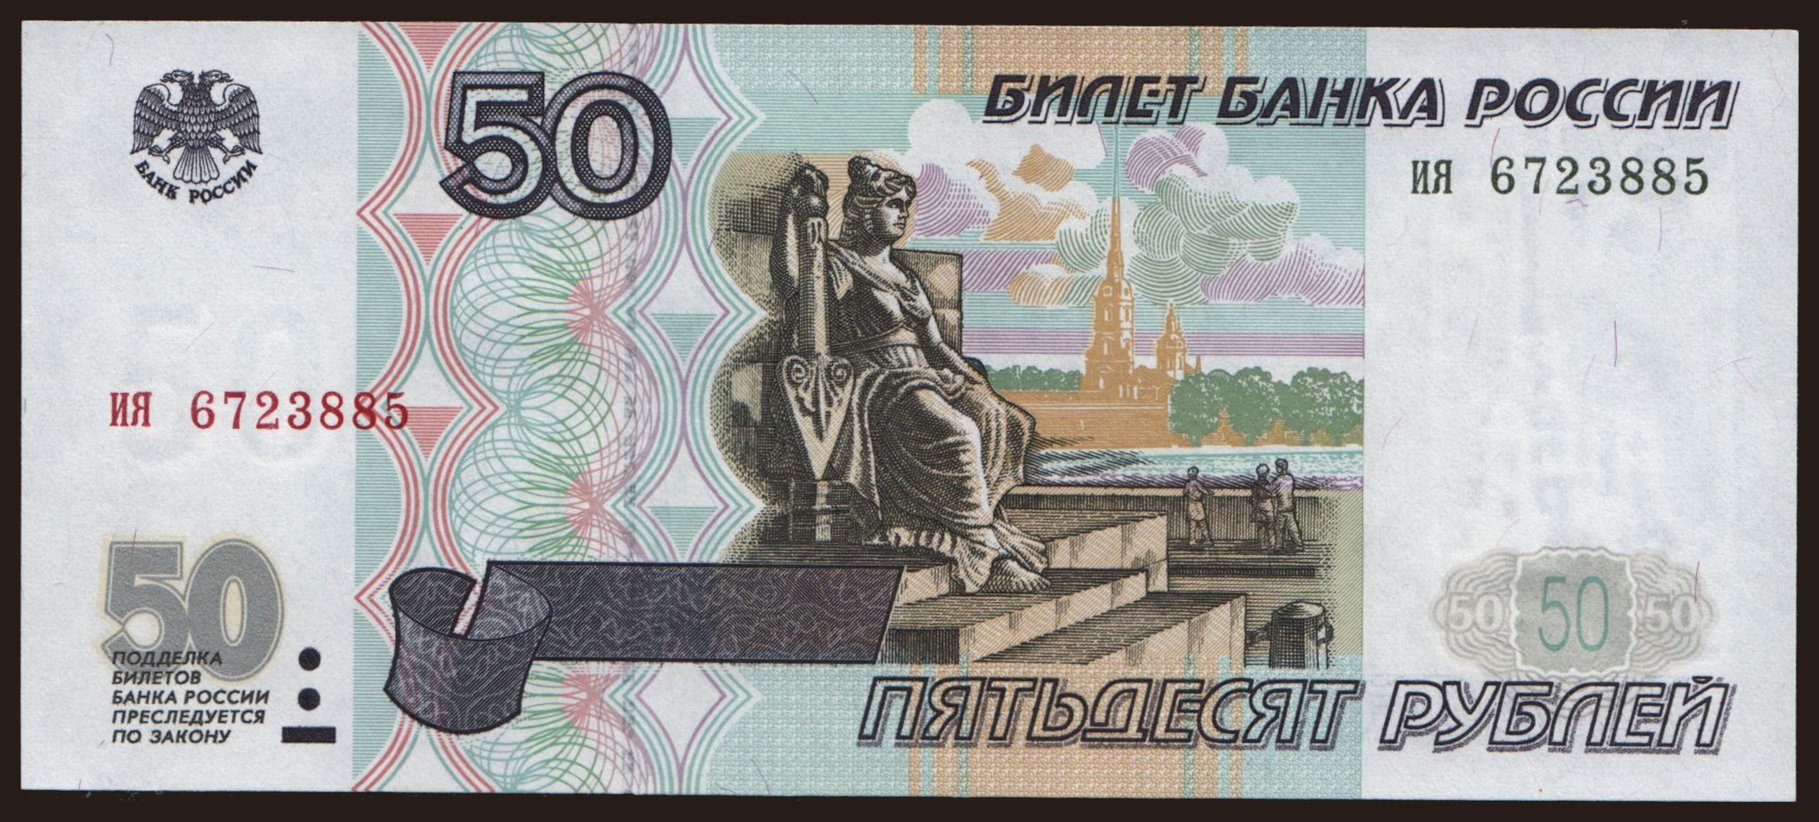 50 rubel, 1997